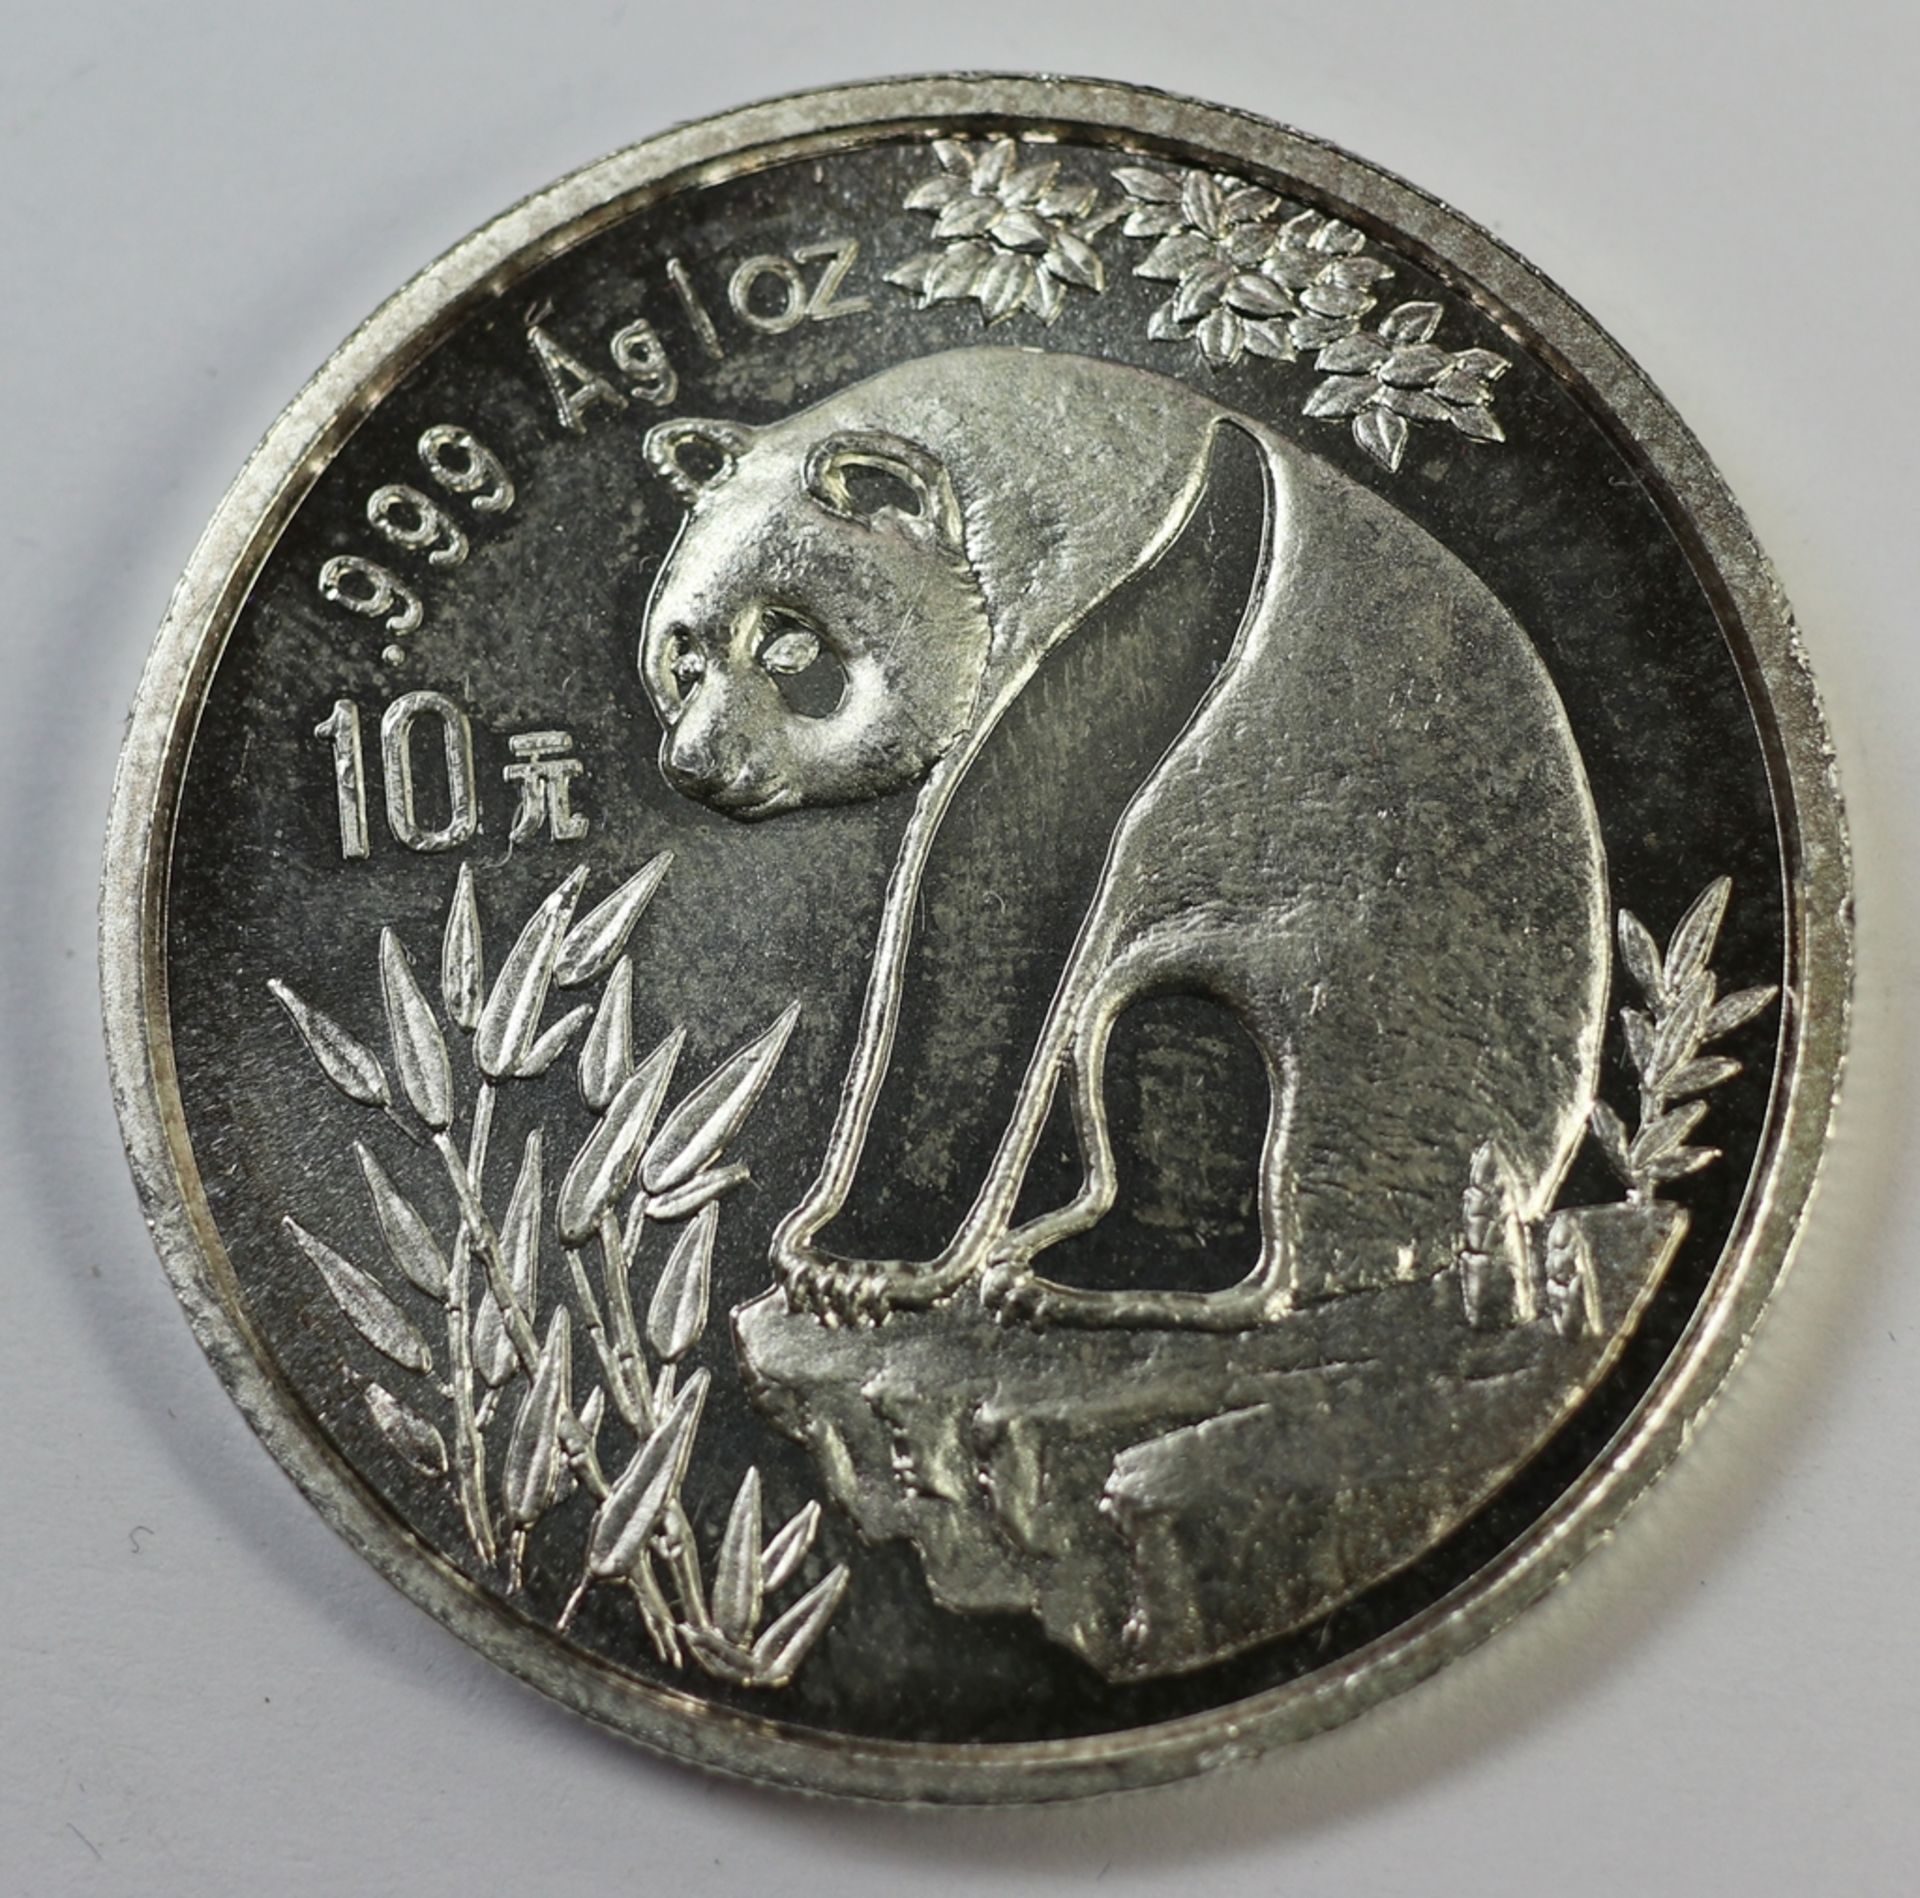 10 Yuan, China Panda in Kapsel 1oz, 1993